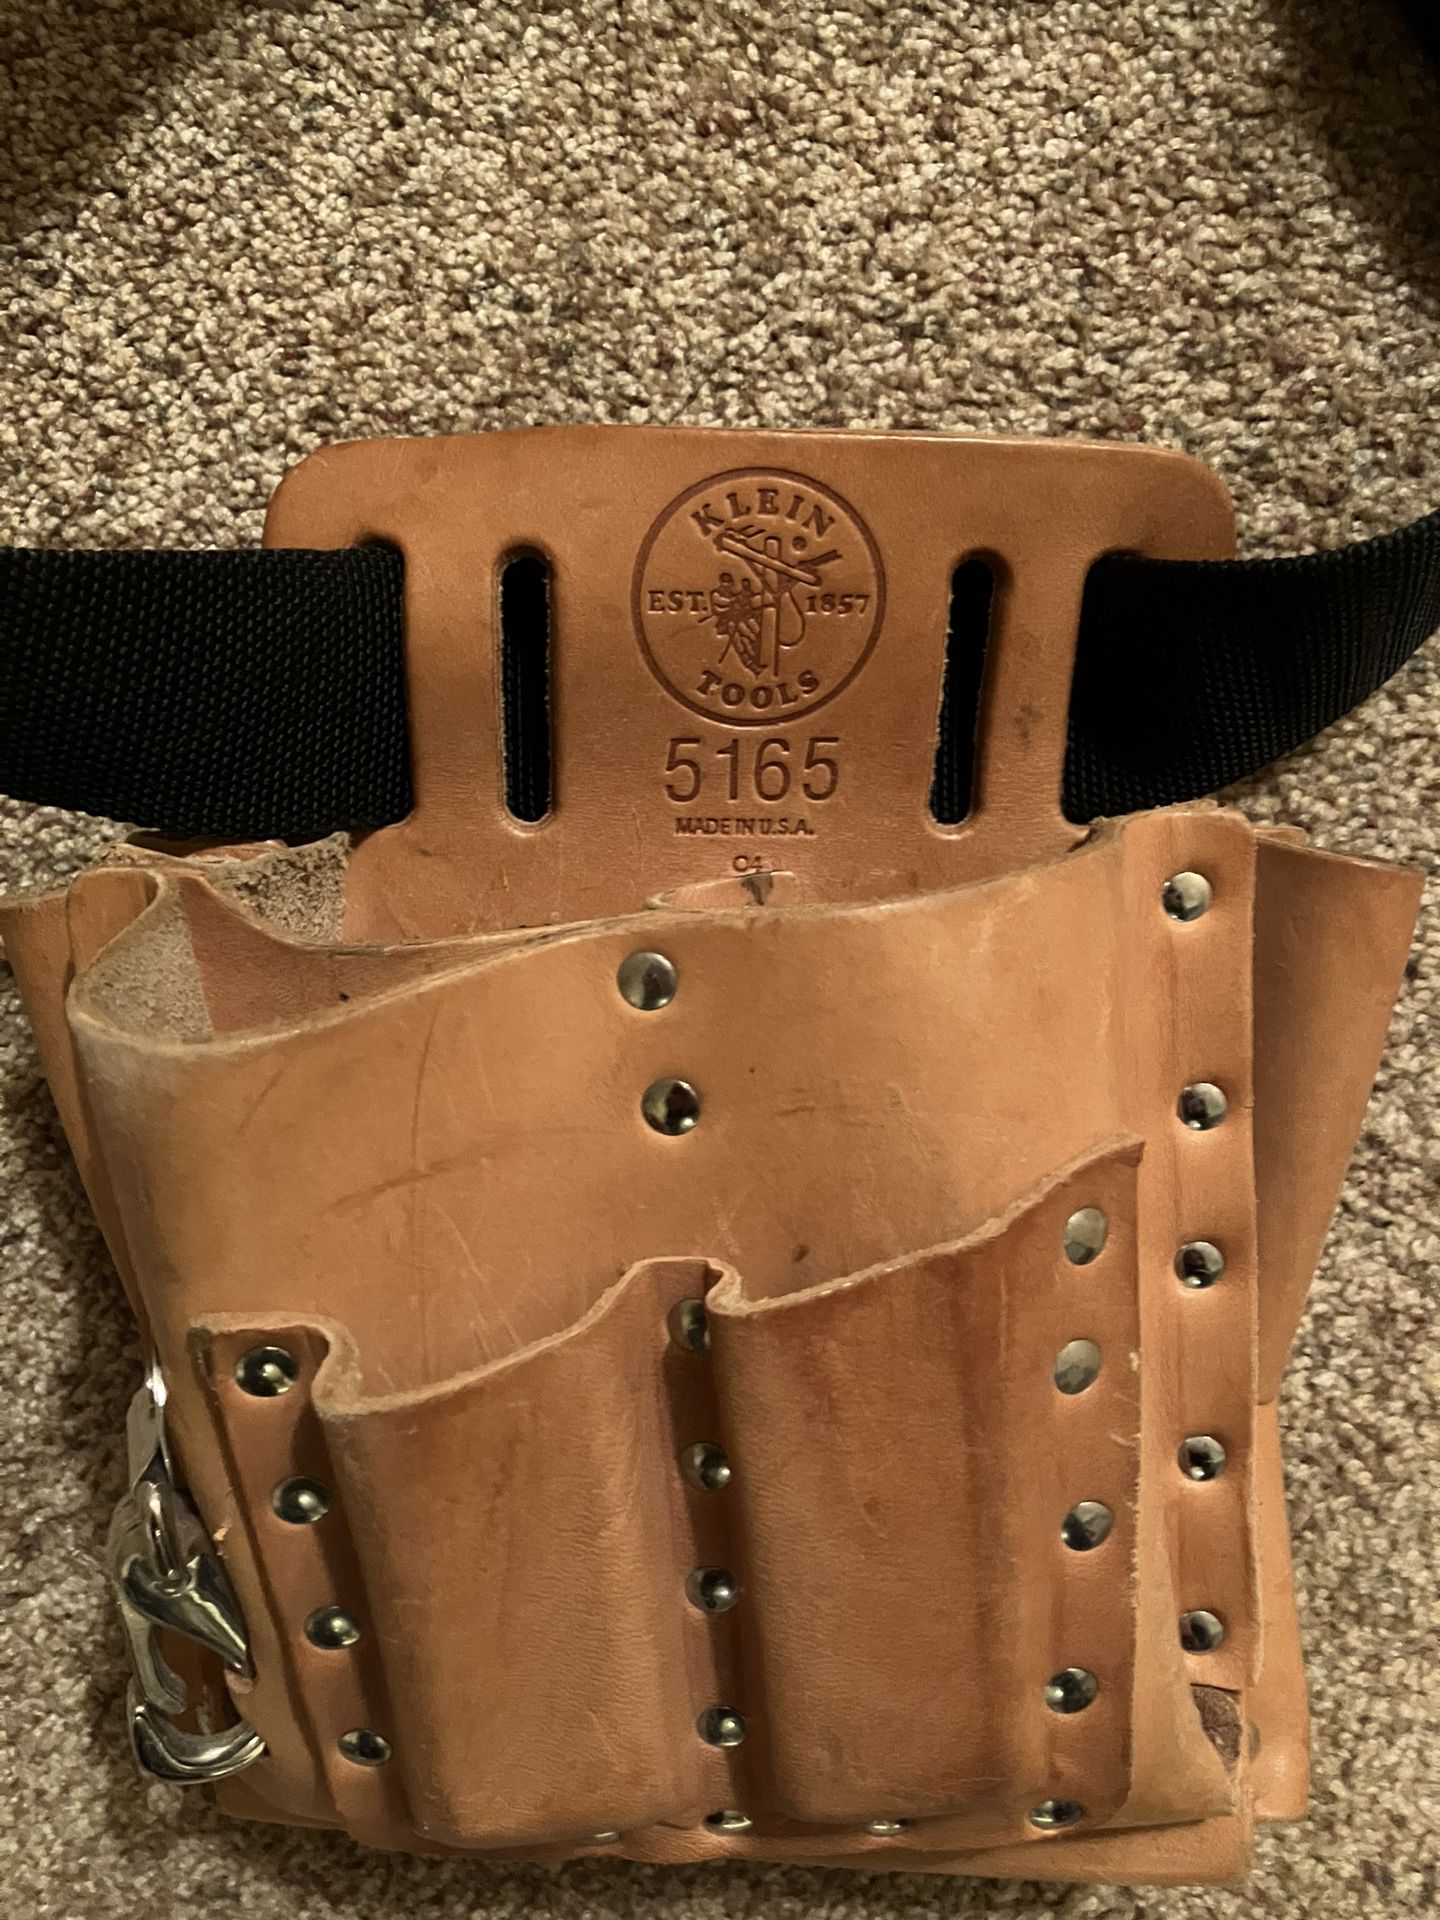 Leather Tool Belt